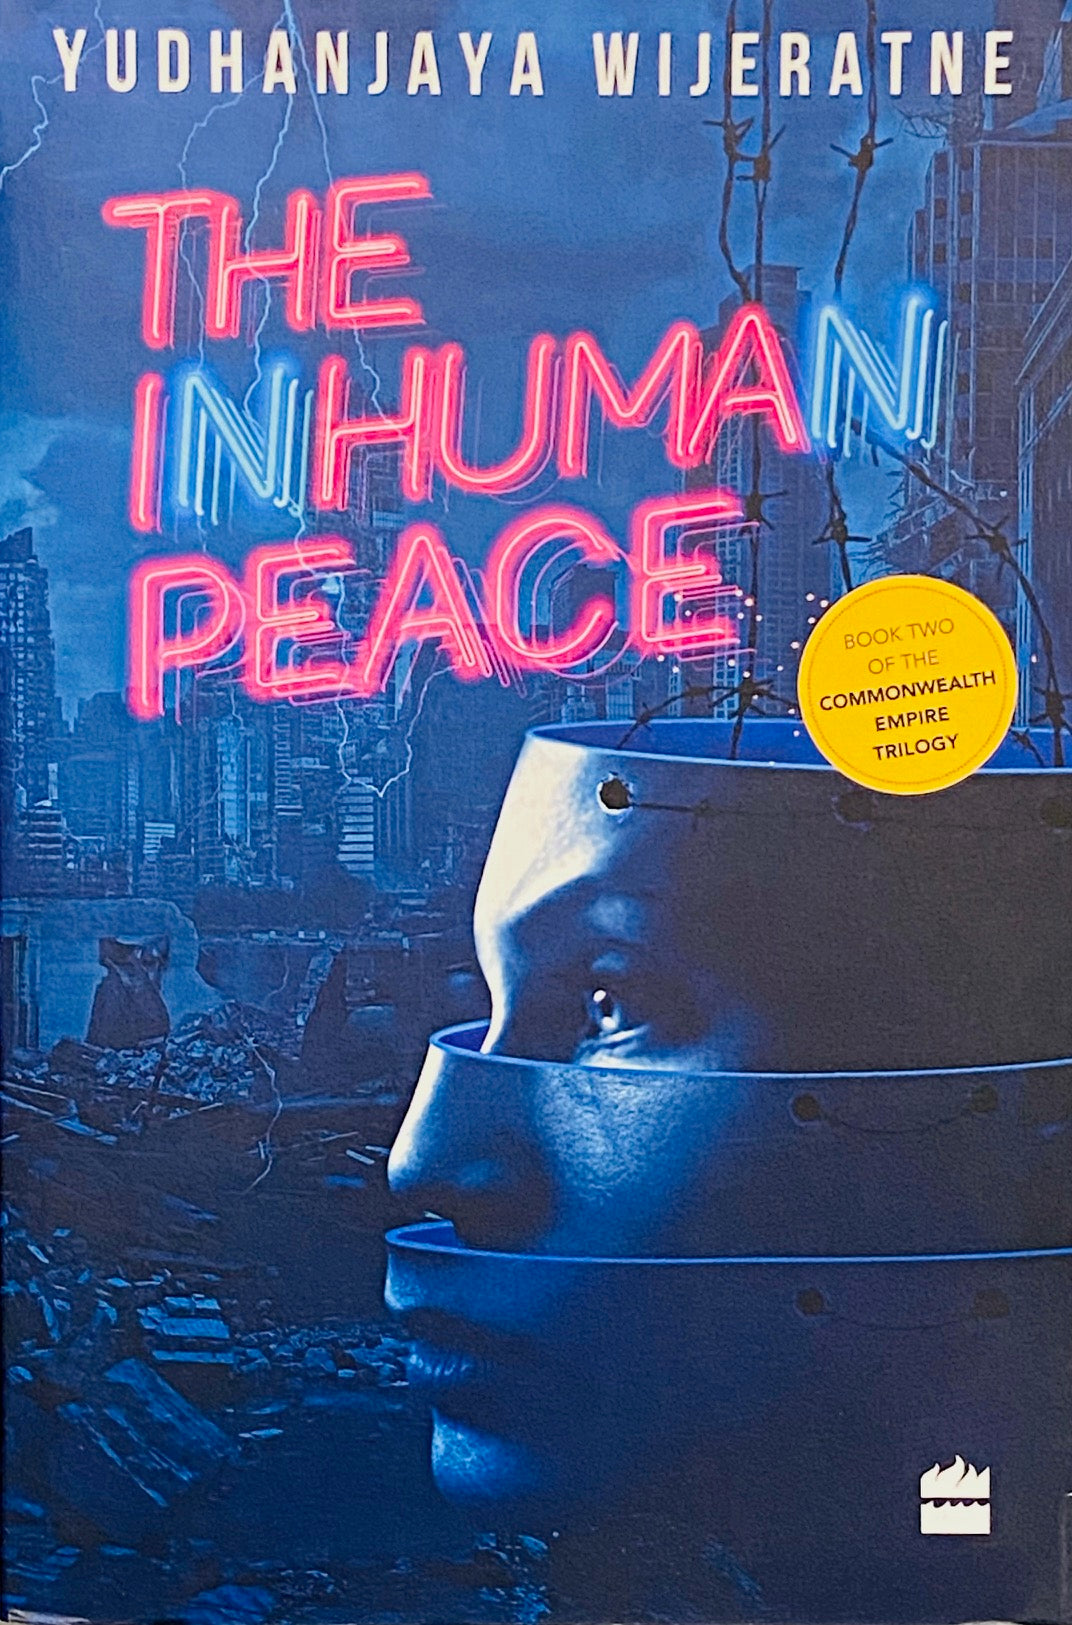 The Inhuman Peace by Yudhanjaya Wijeratne